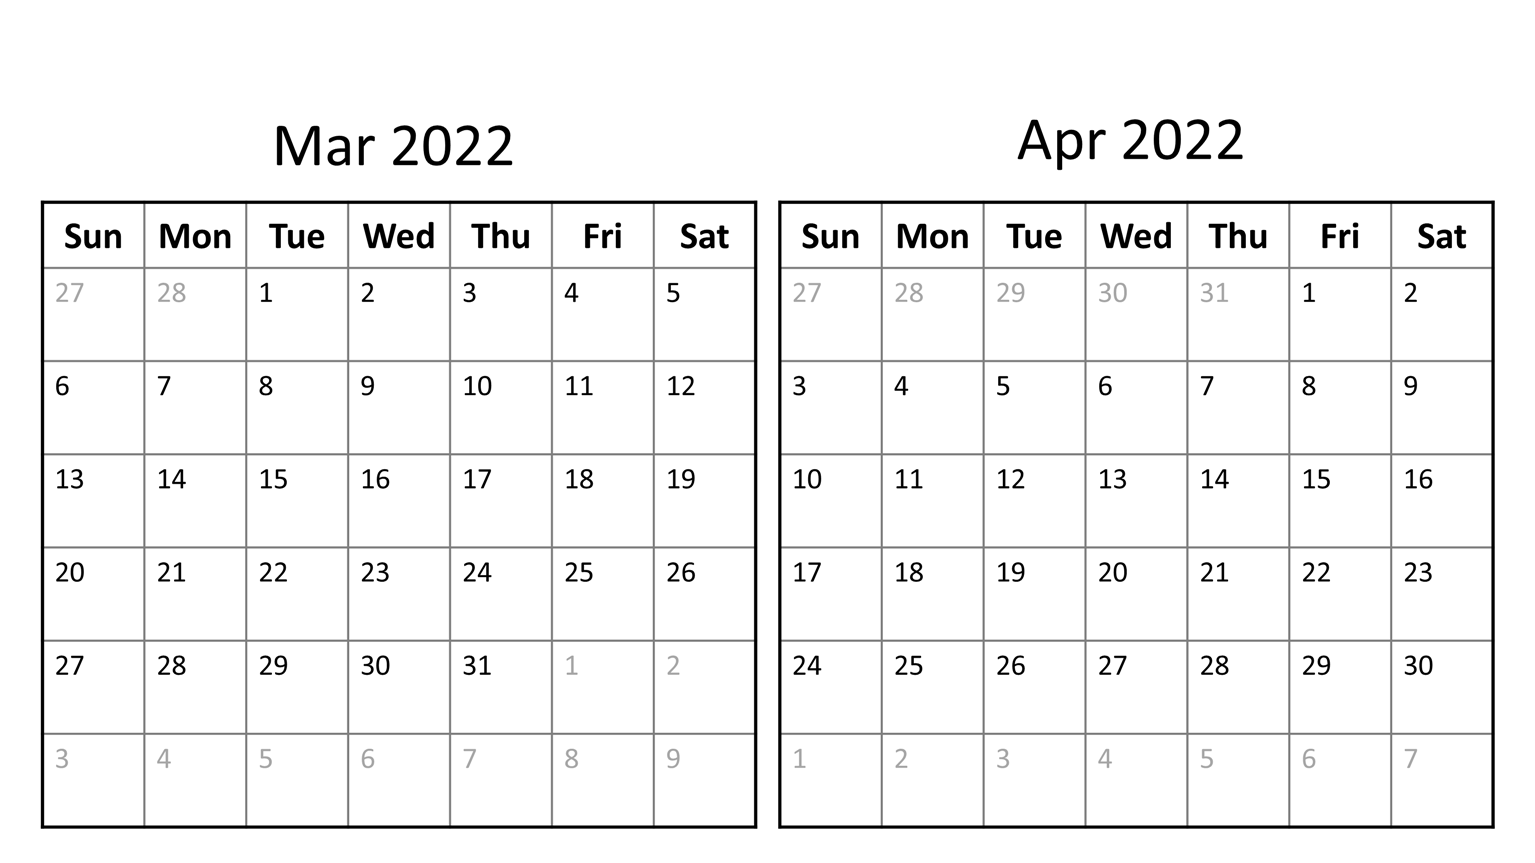 April 2022 calendar